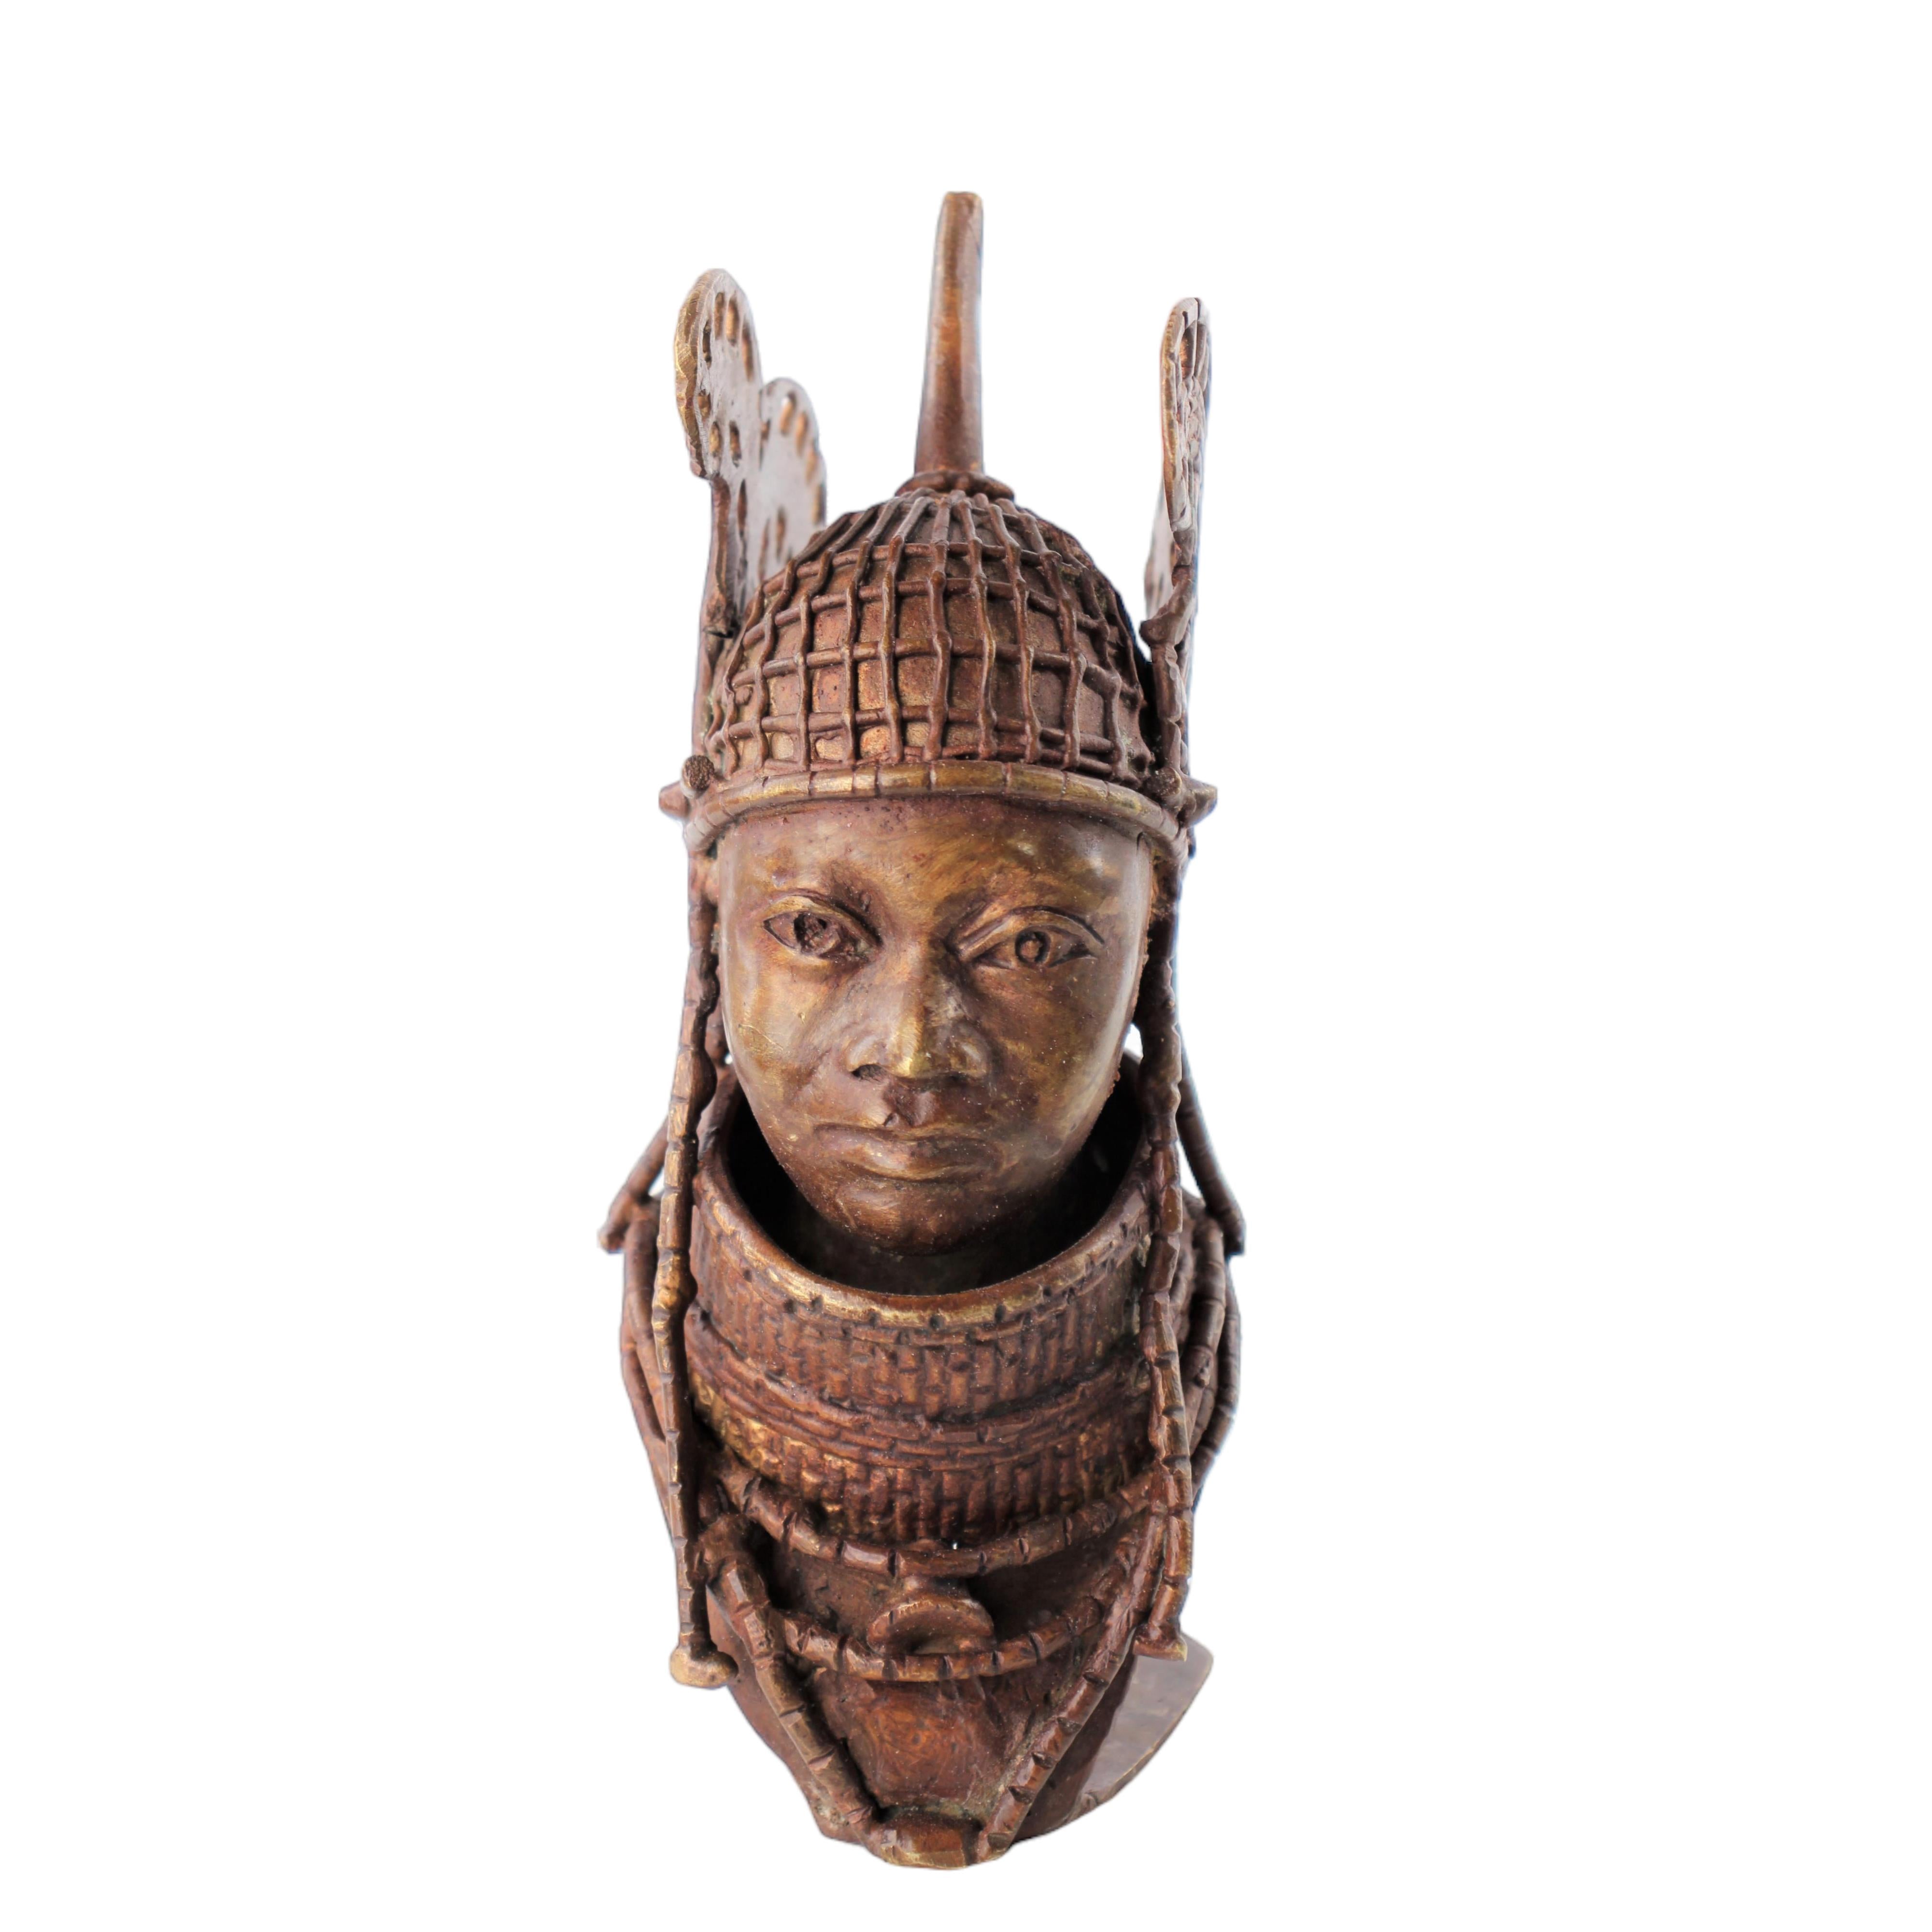 Igbo/Ibo Tribe Heads ~7.9" Tall - Heads